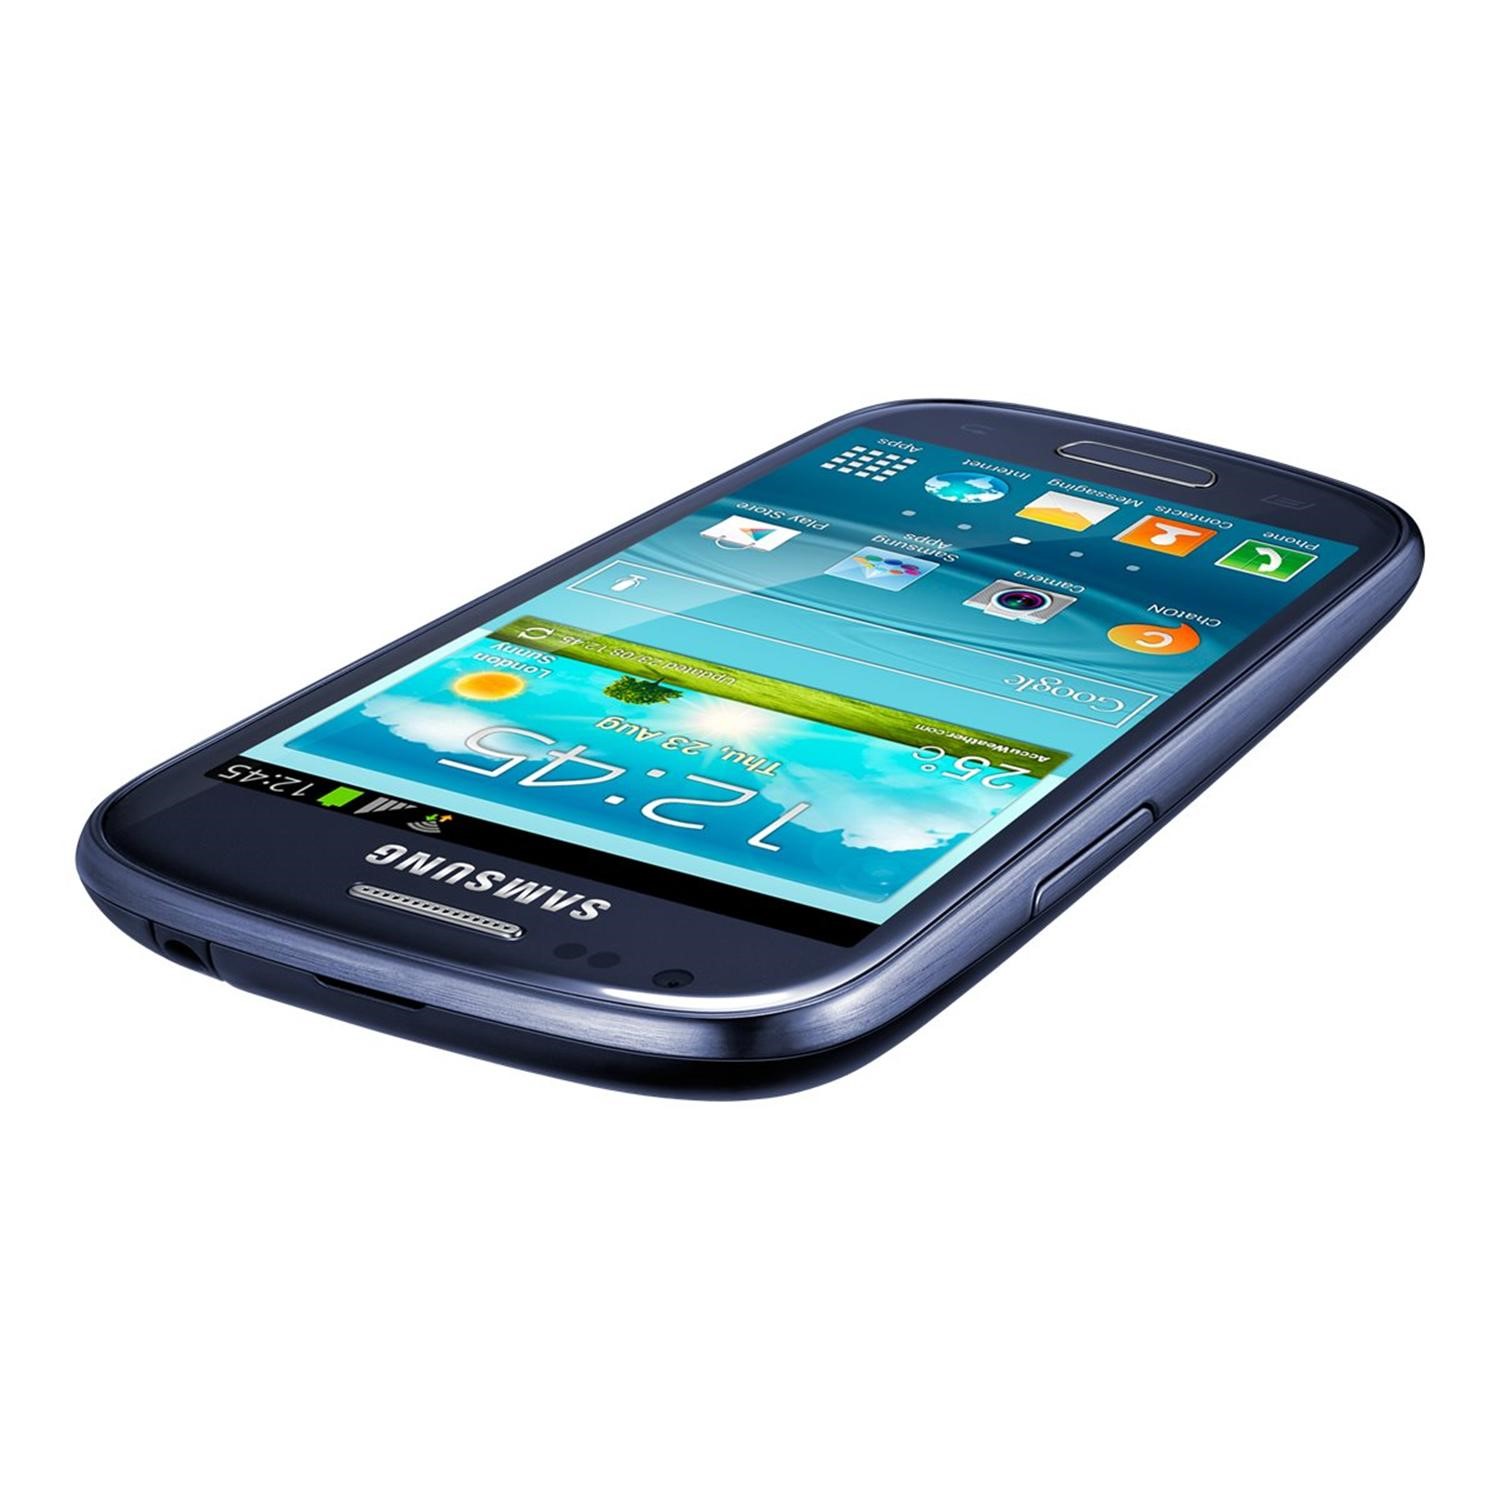 Galaxy 3 ru. Samsung Galaxy gt-i8190. Смартфон Samsung Galaxy s III Mini gt-i8190 8gb. Samsung gt i8200. Galaxy s III Mini gt-i8200.